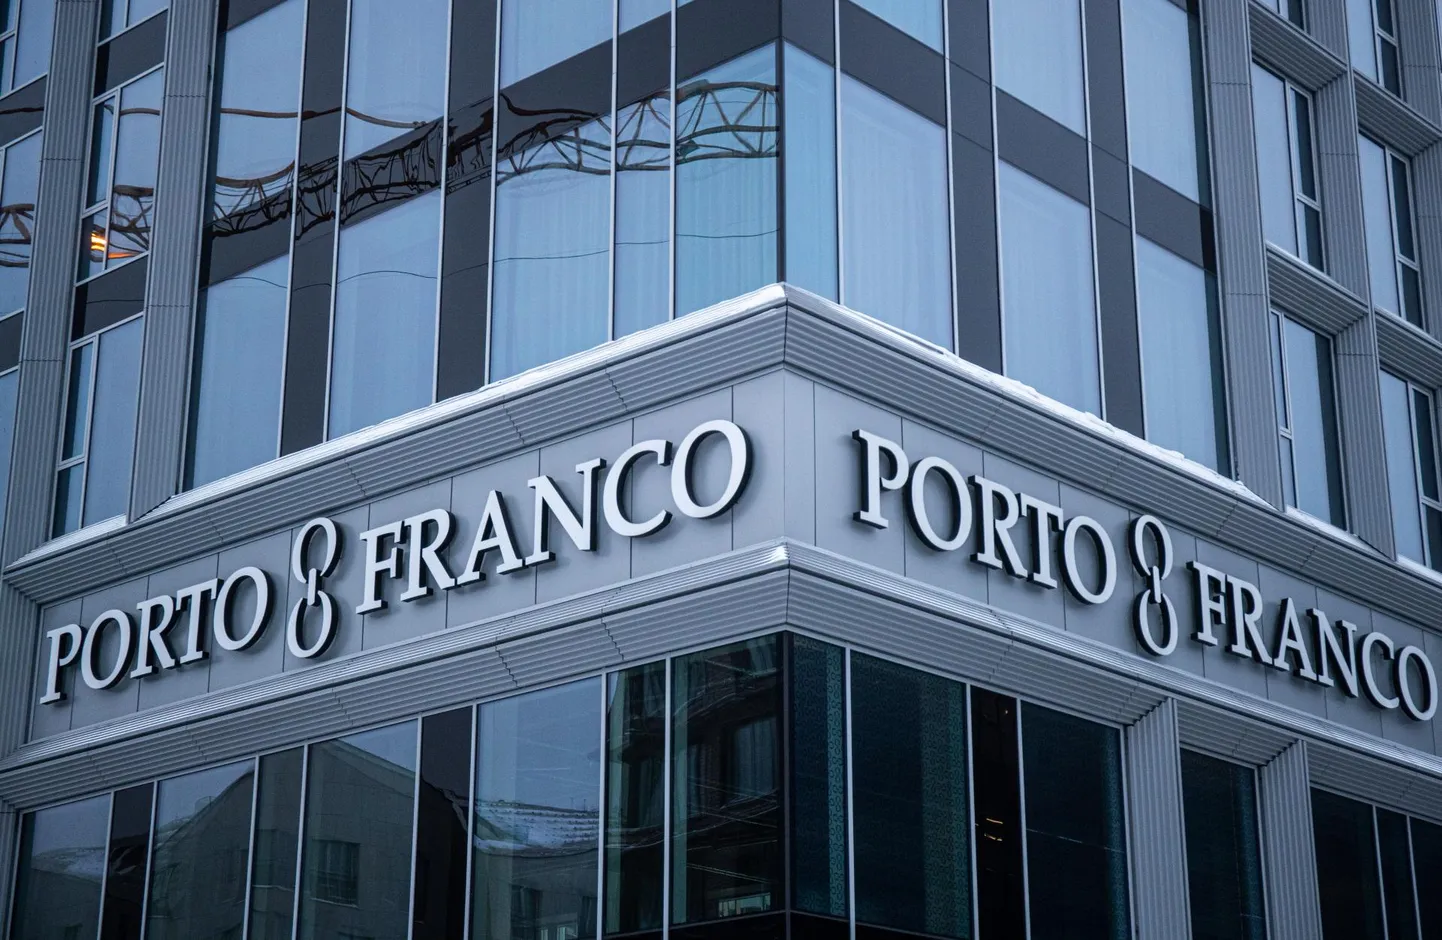 Квартал Porto Franco.